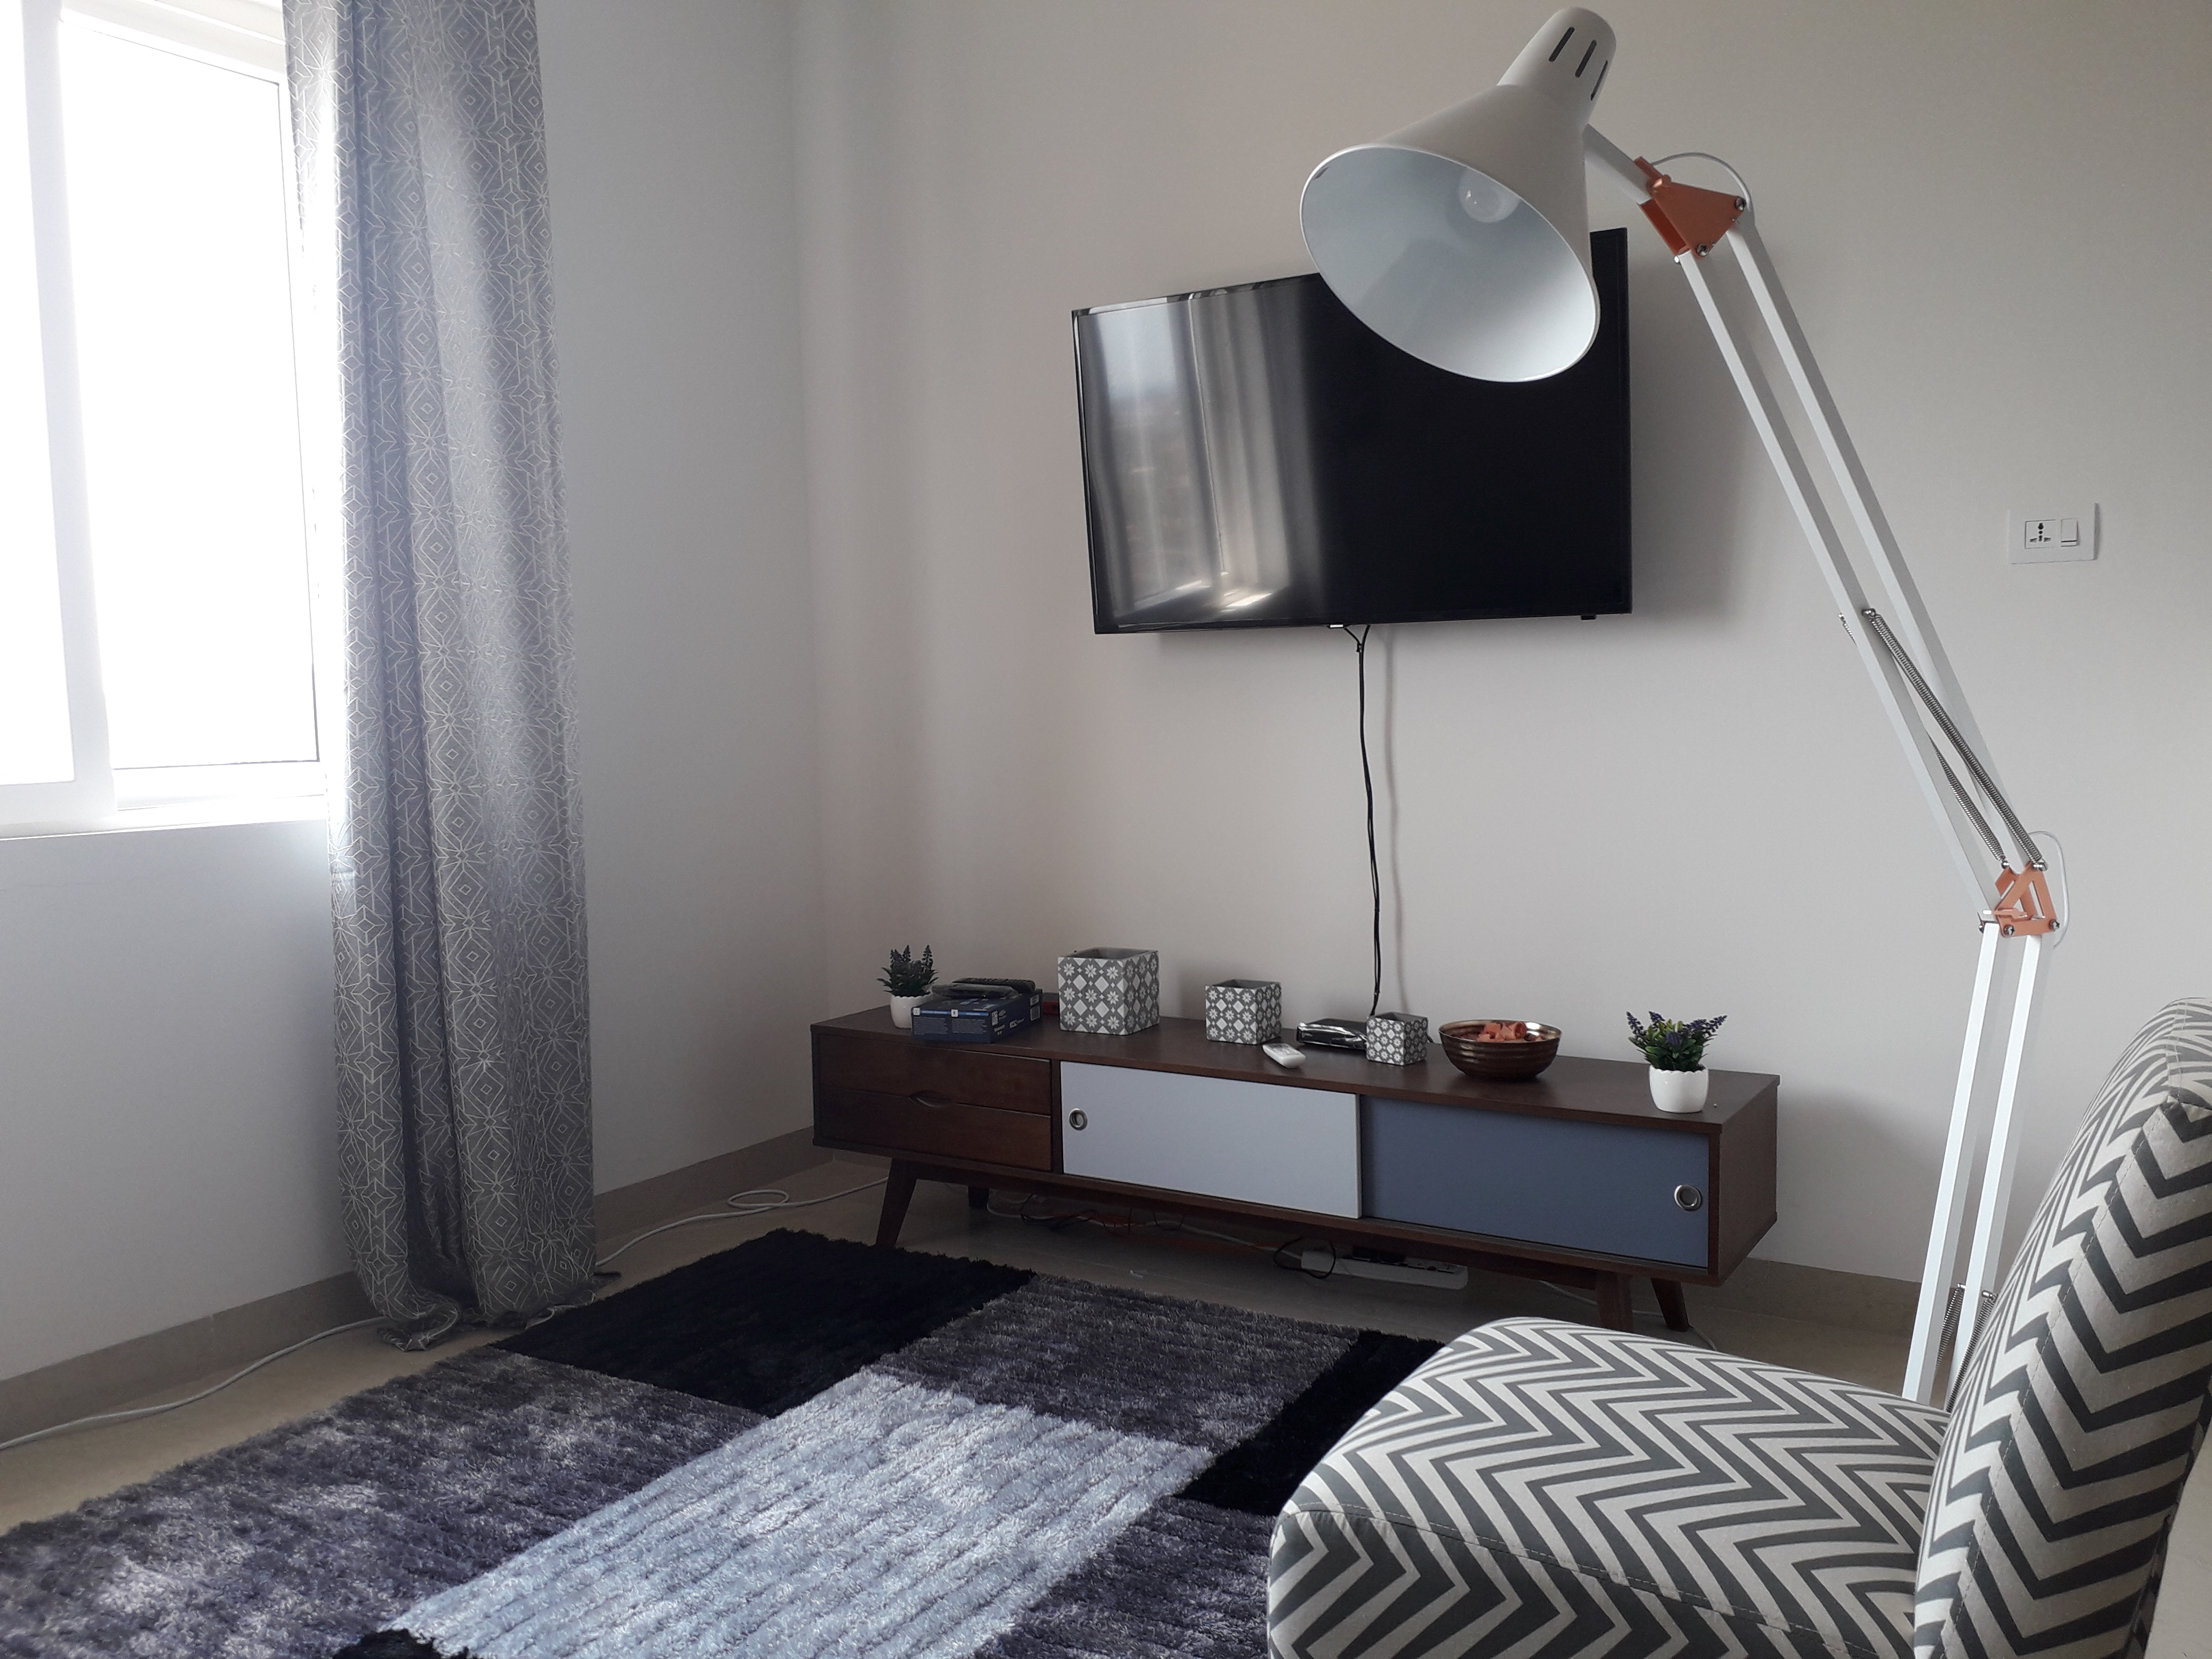 2 Bedroom Furnished Apartment for Rent at Ringway Estates